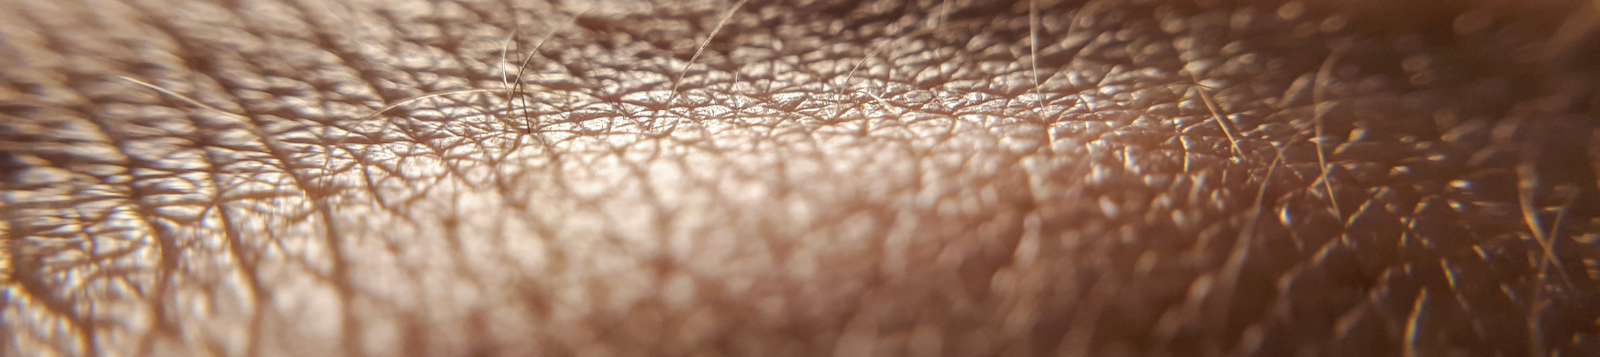 Closeup of skin